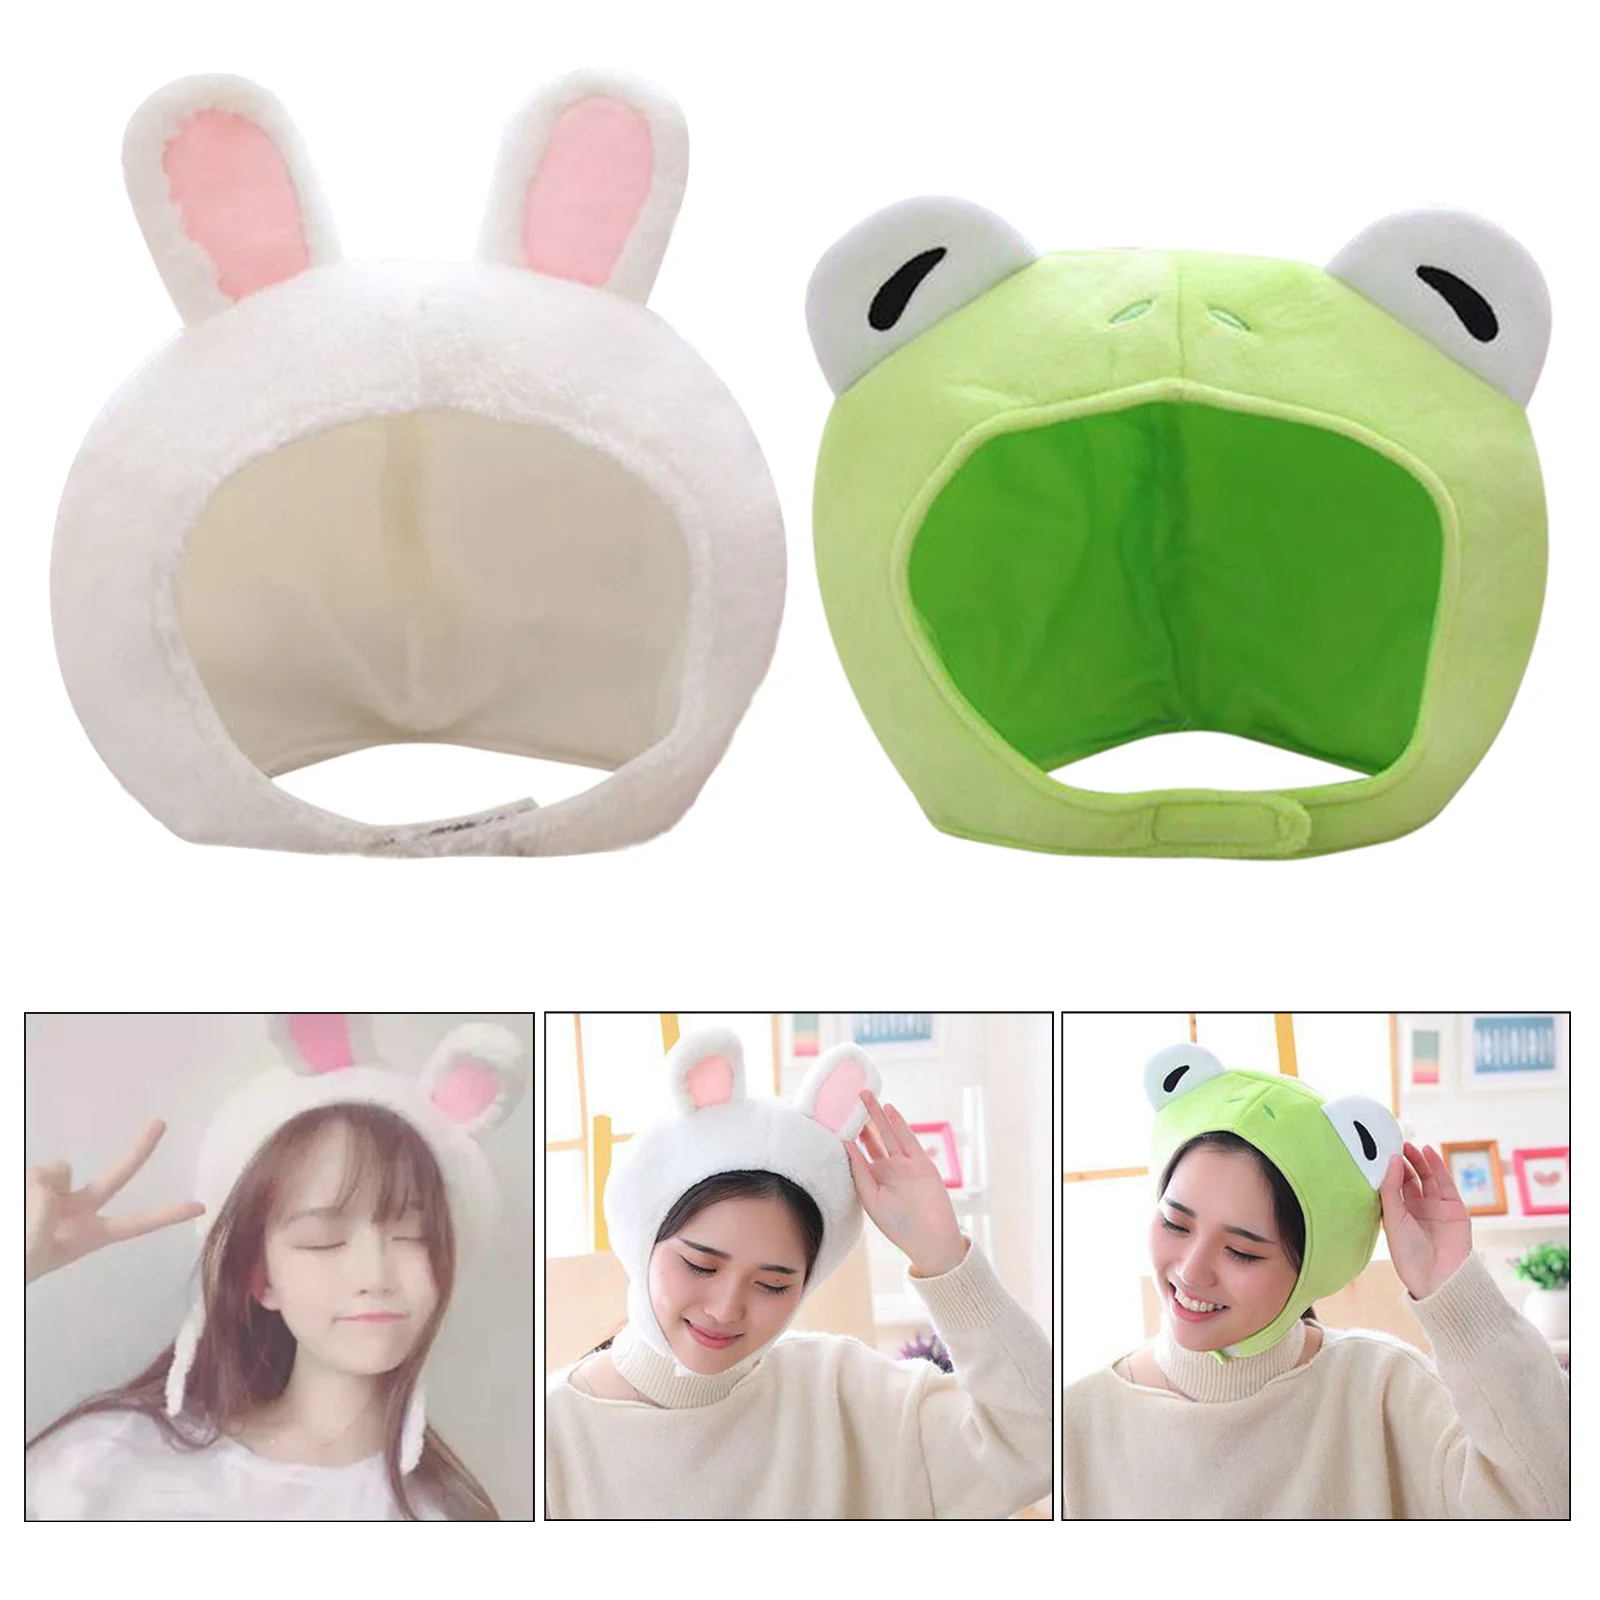 Cute Animal Ears Plush Headbands Frog/Rabbit Headwear for Halloween Costume Cosplay